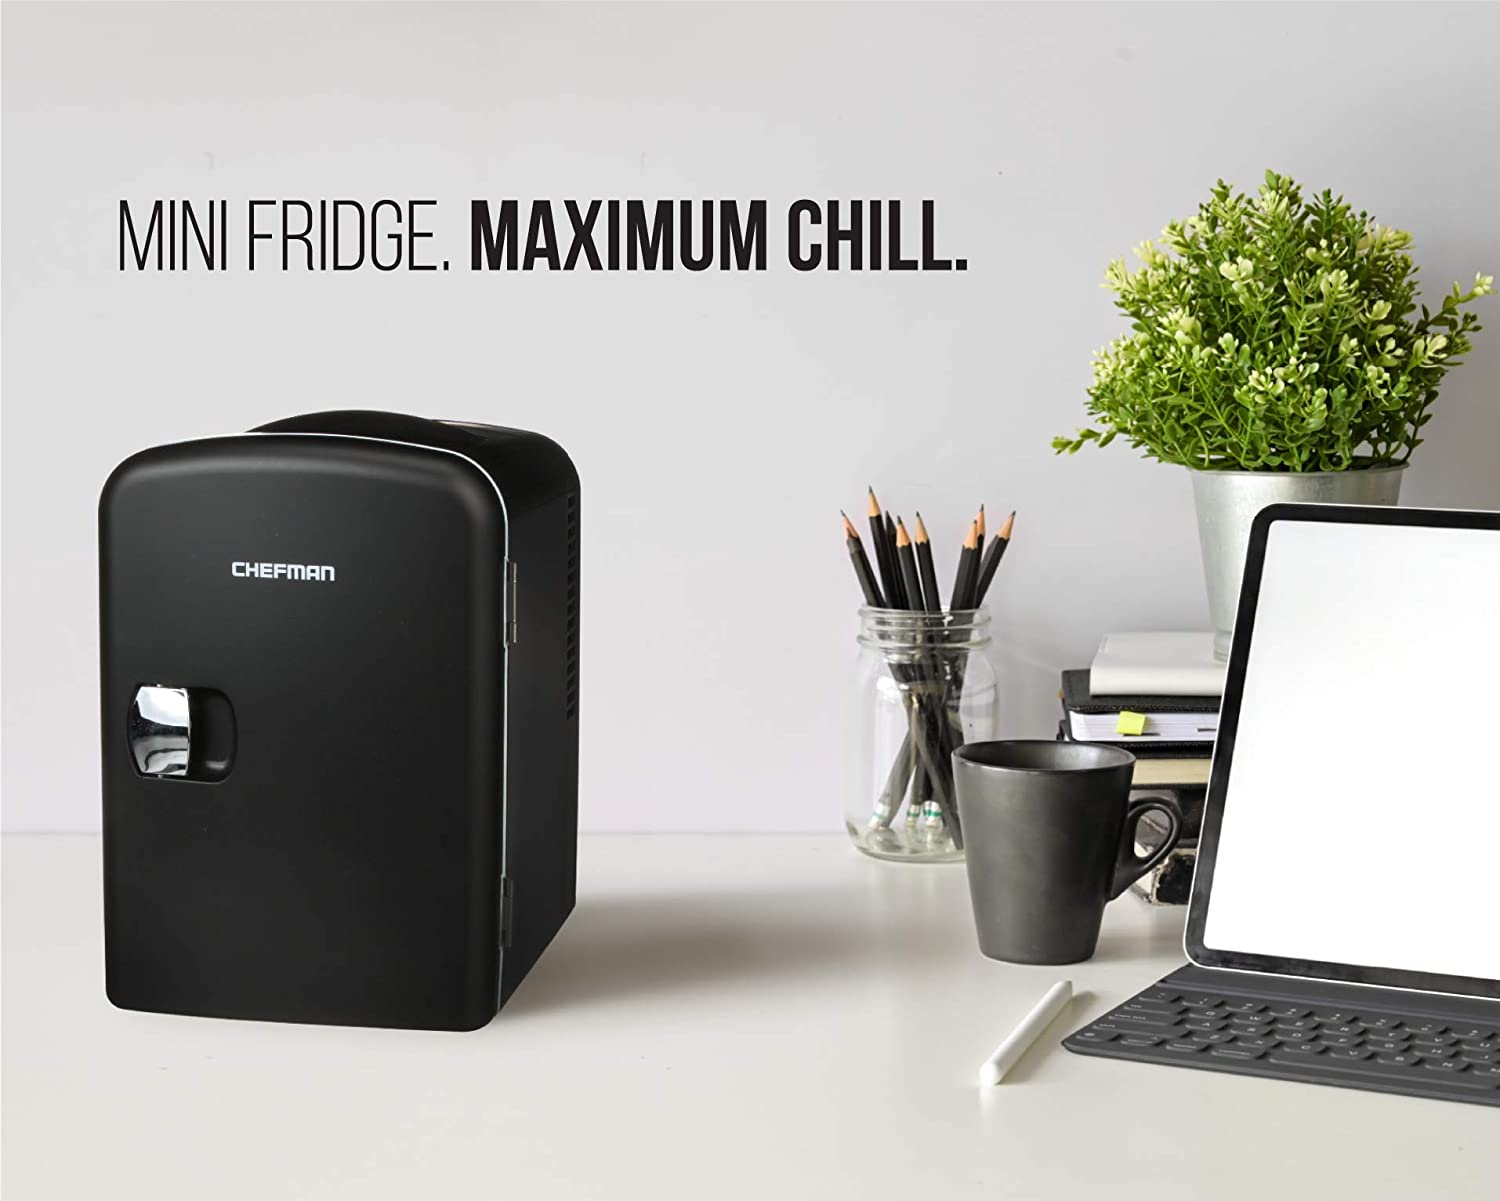 Chefman Portable 4L Mini Fridge w/ Heating and Cooling - Black, New - image 5 of 8